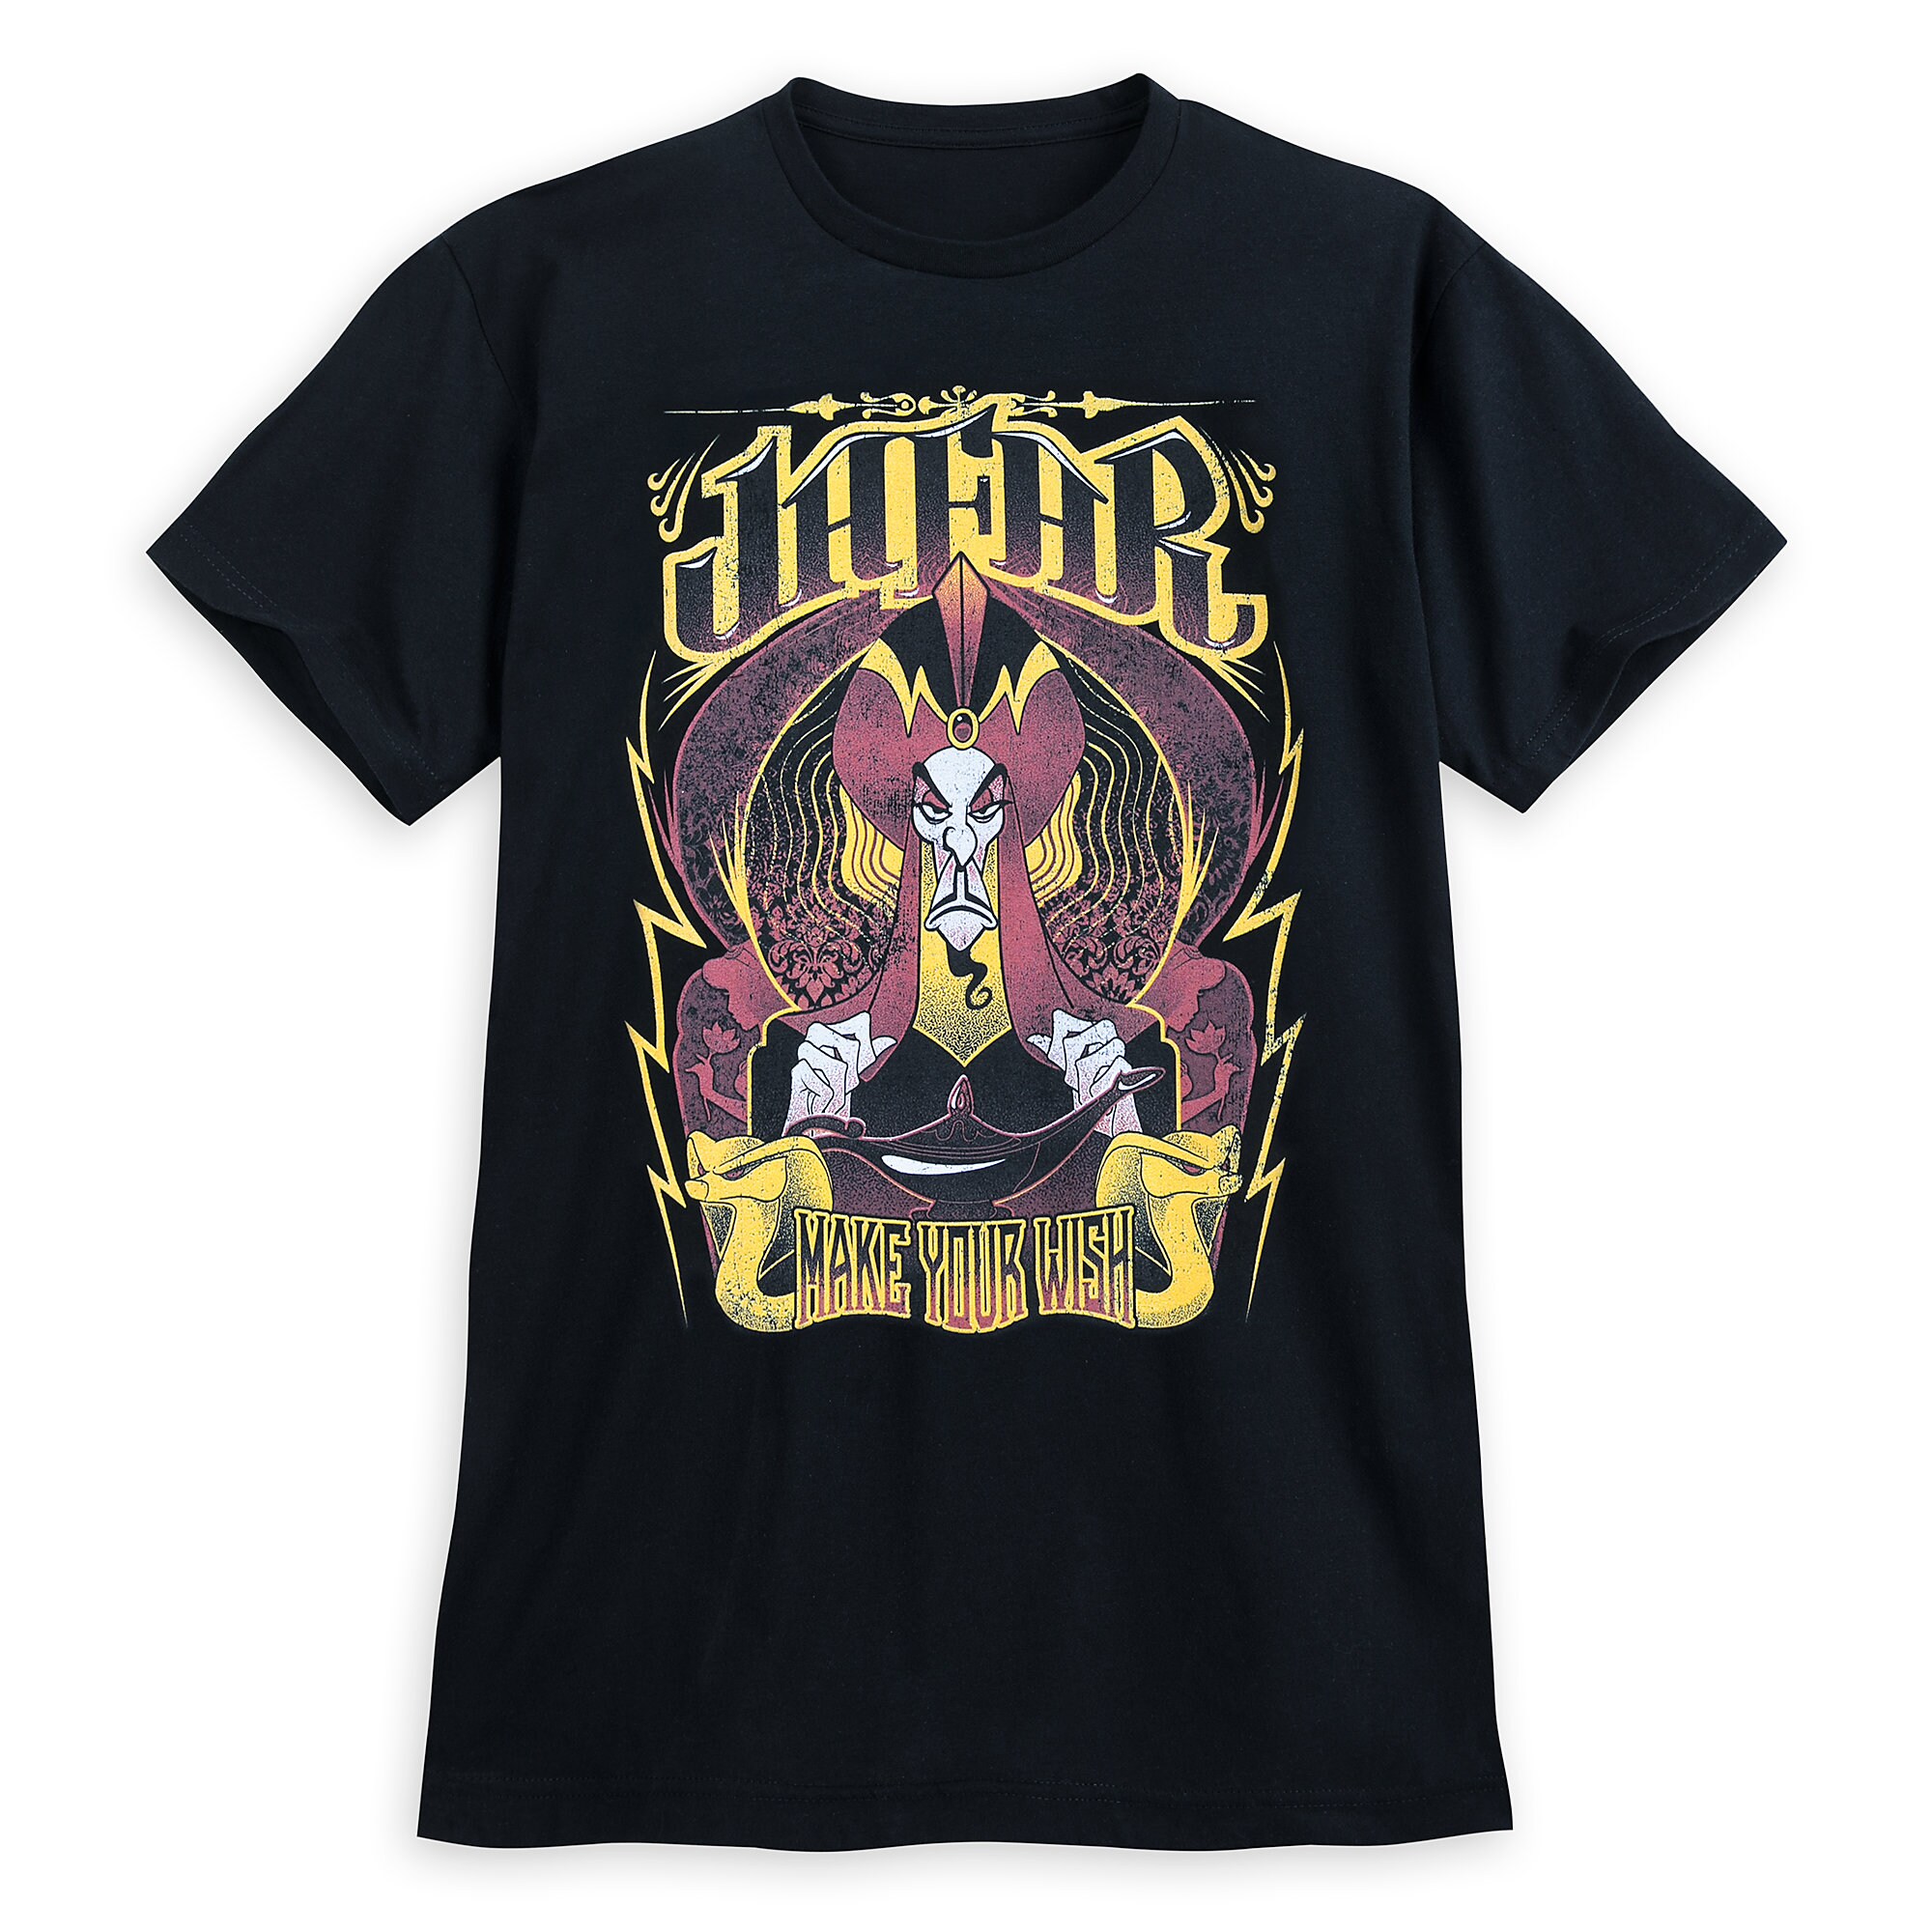 Jafar T-Shirt for Men - Aladdin